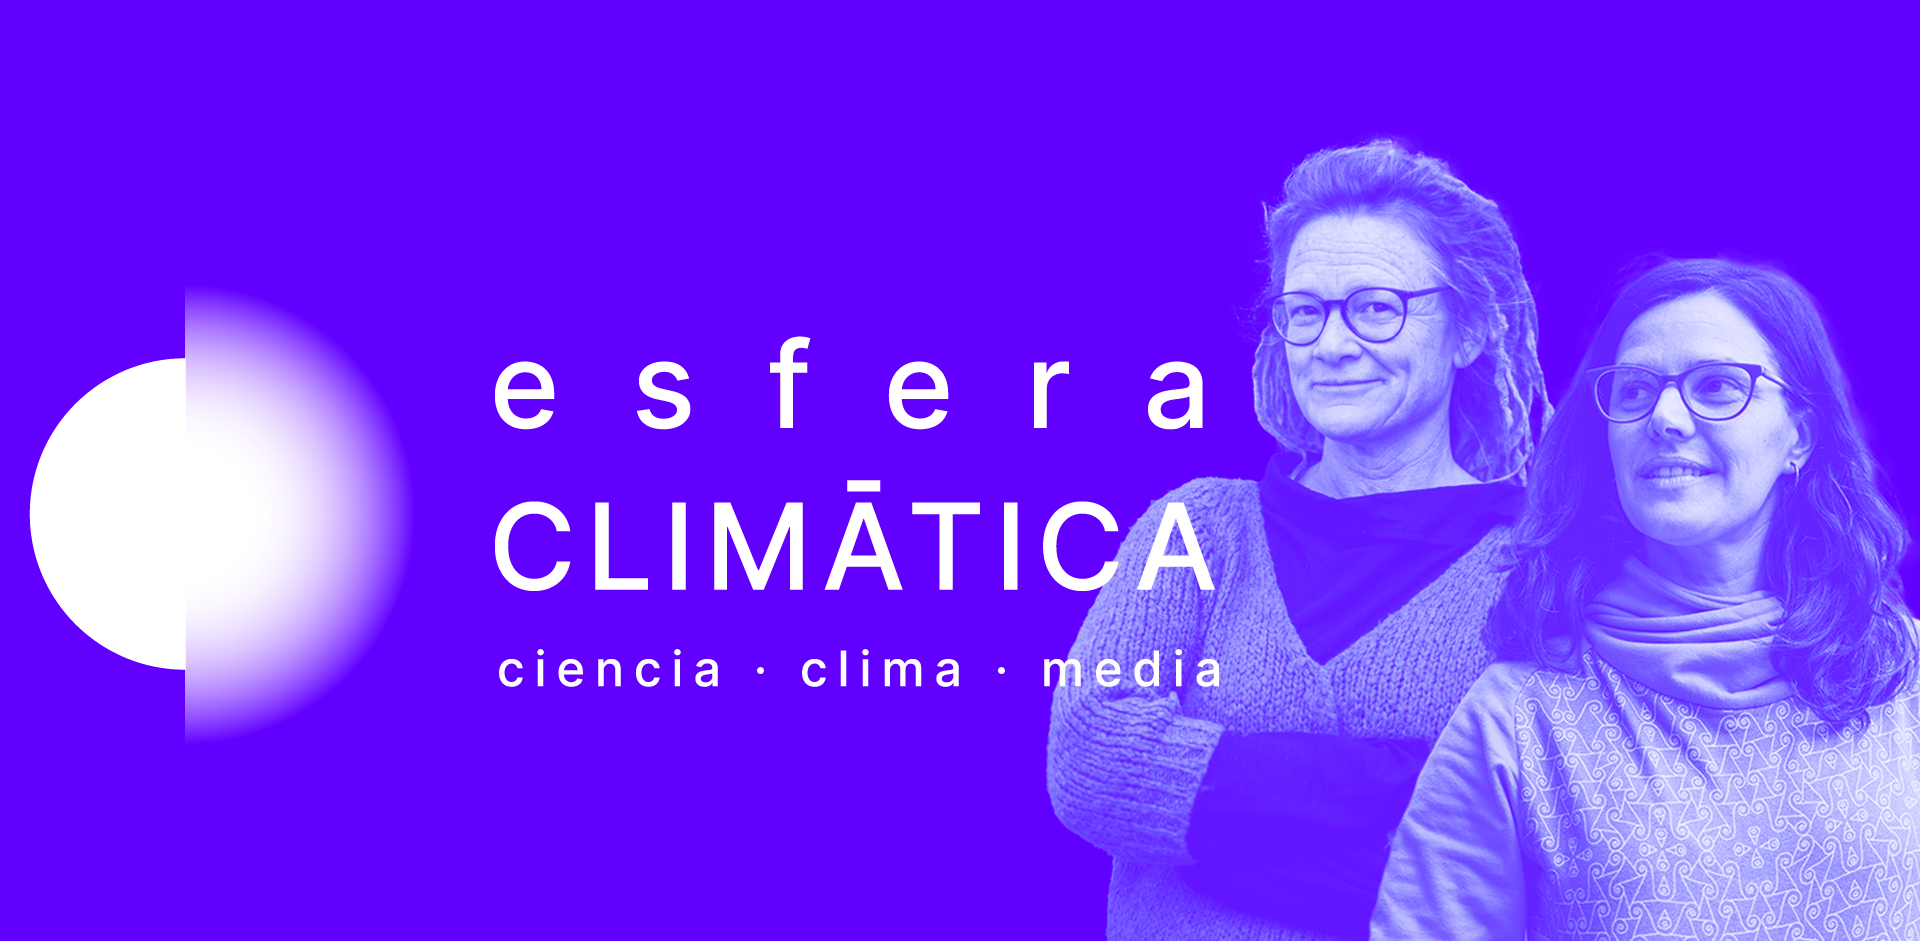 Nace Esfera Climática, un gran gabinete de comunicación que conecta a medios de comunicación e investigadoras relevantes para aumentar la cobertura mediática relacionada con el clima en España. Imagen: Esfera Climática